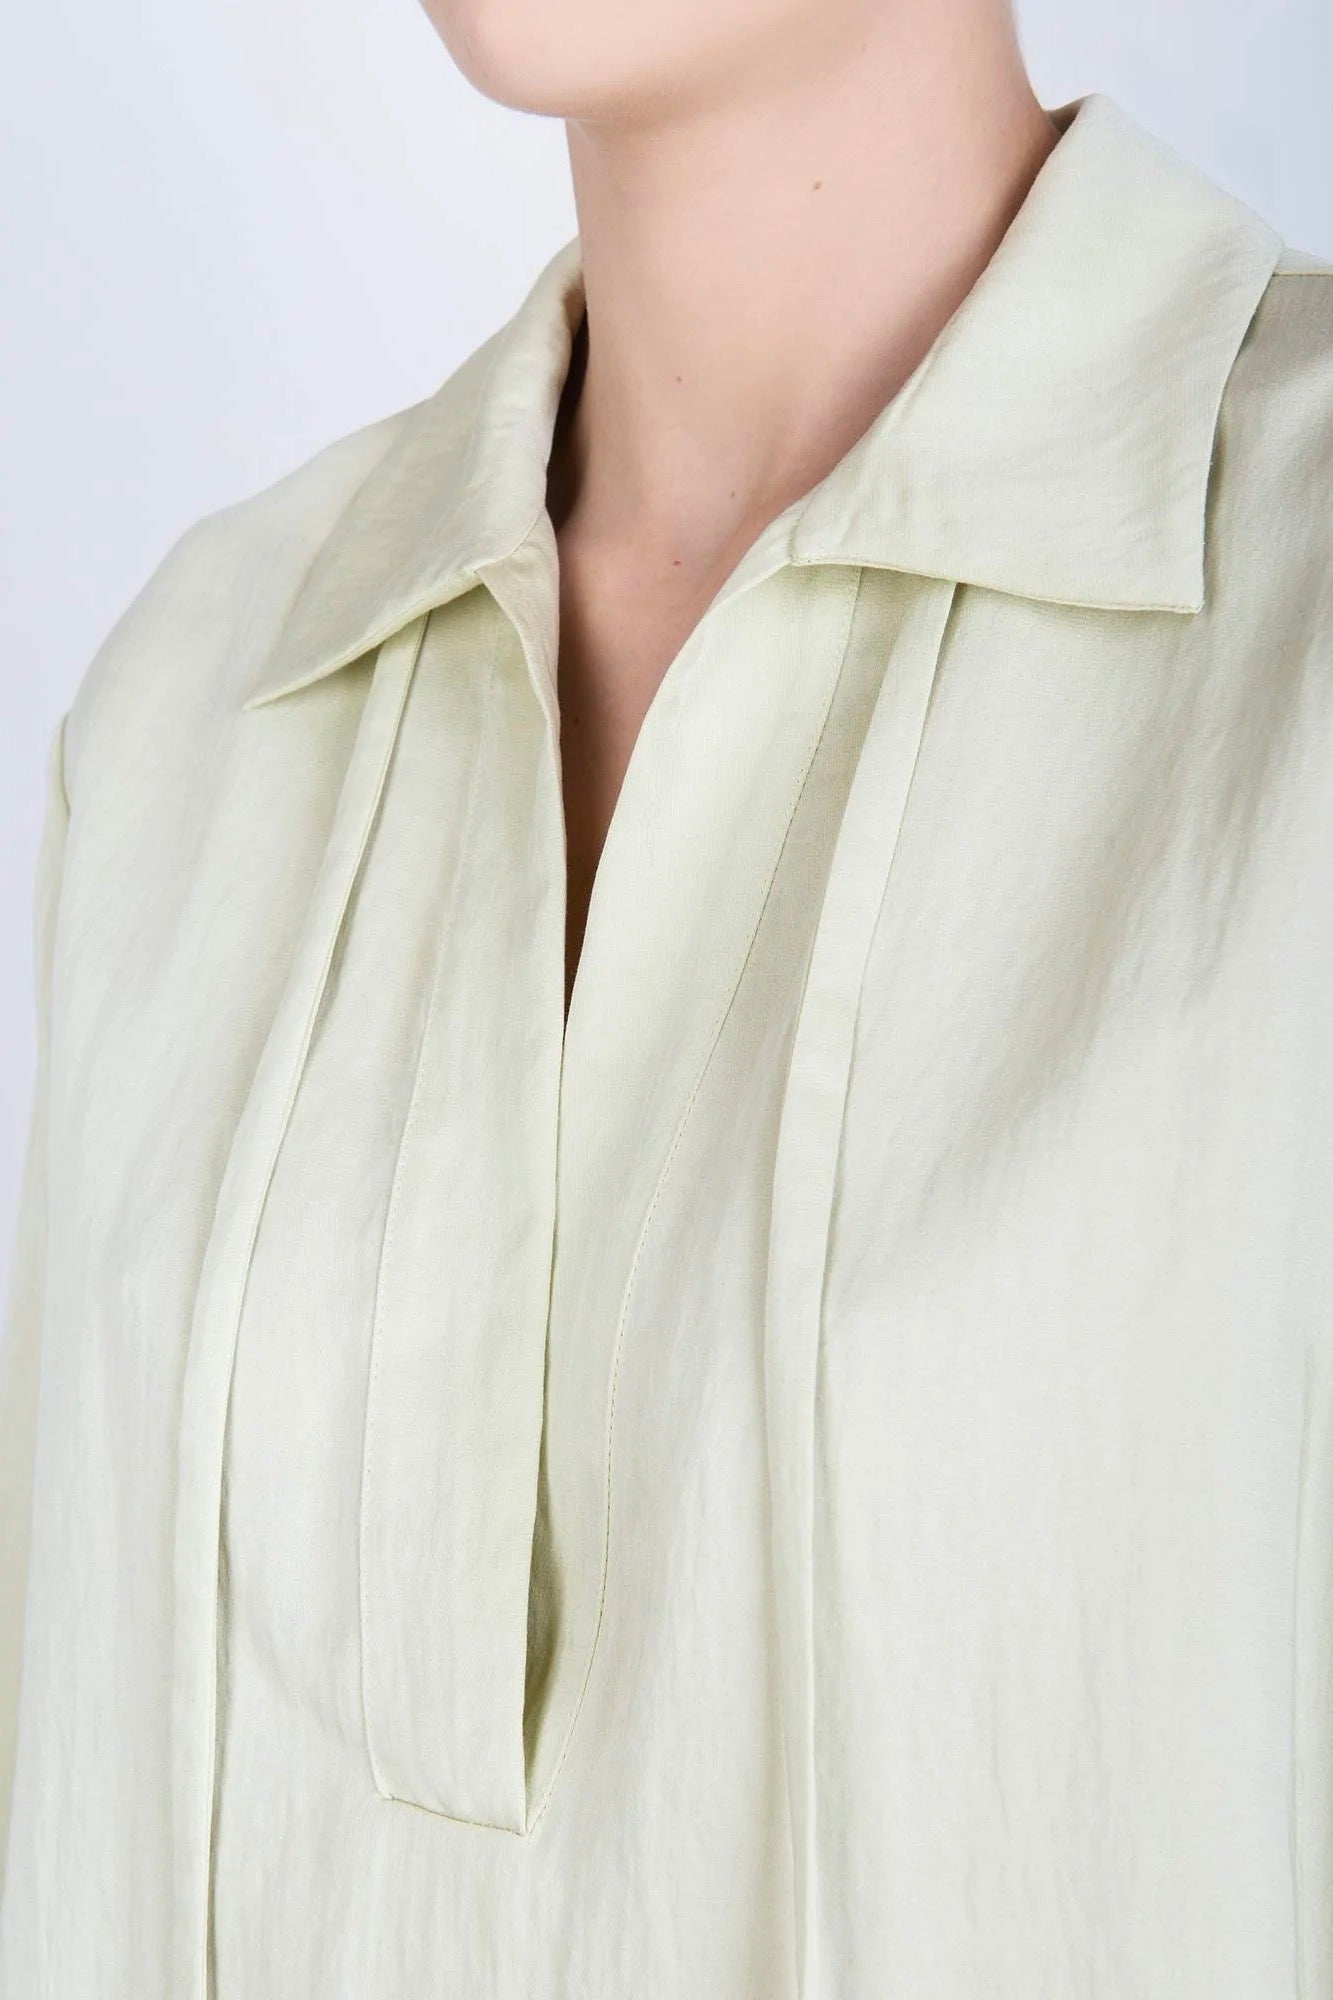 Alysi - Long Sleeve Shirt: Vanilla